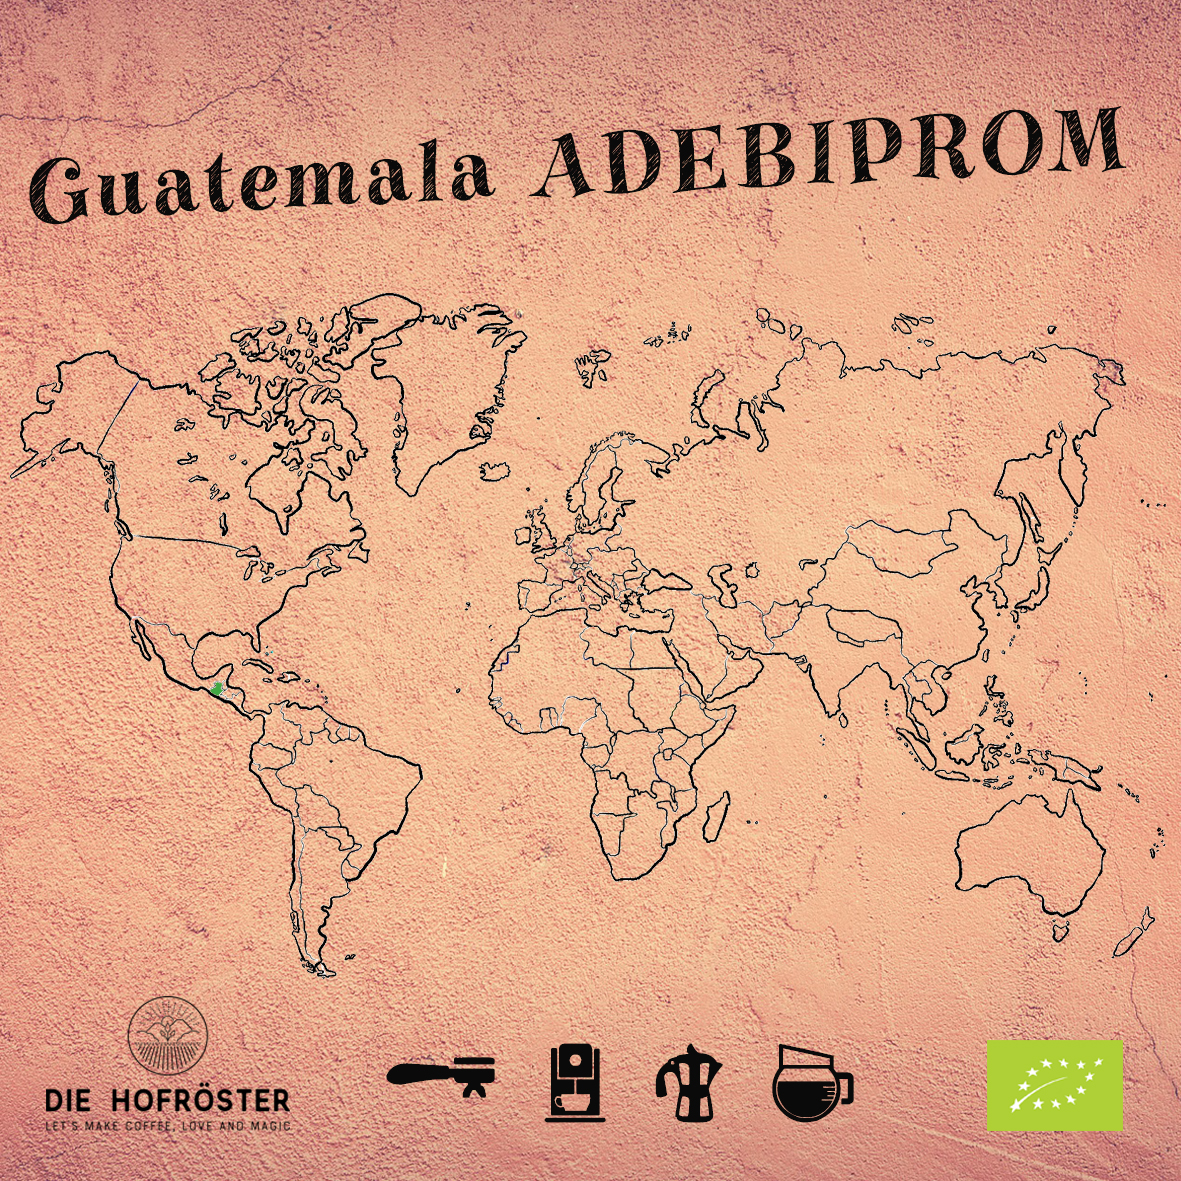 Guatemala ADEBIPROM